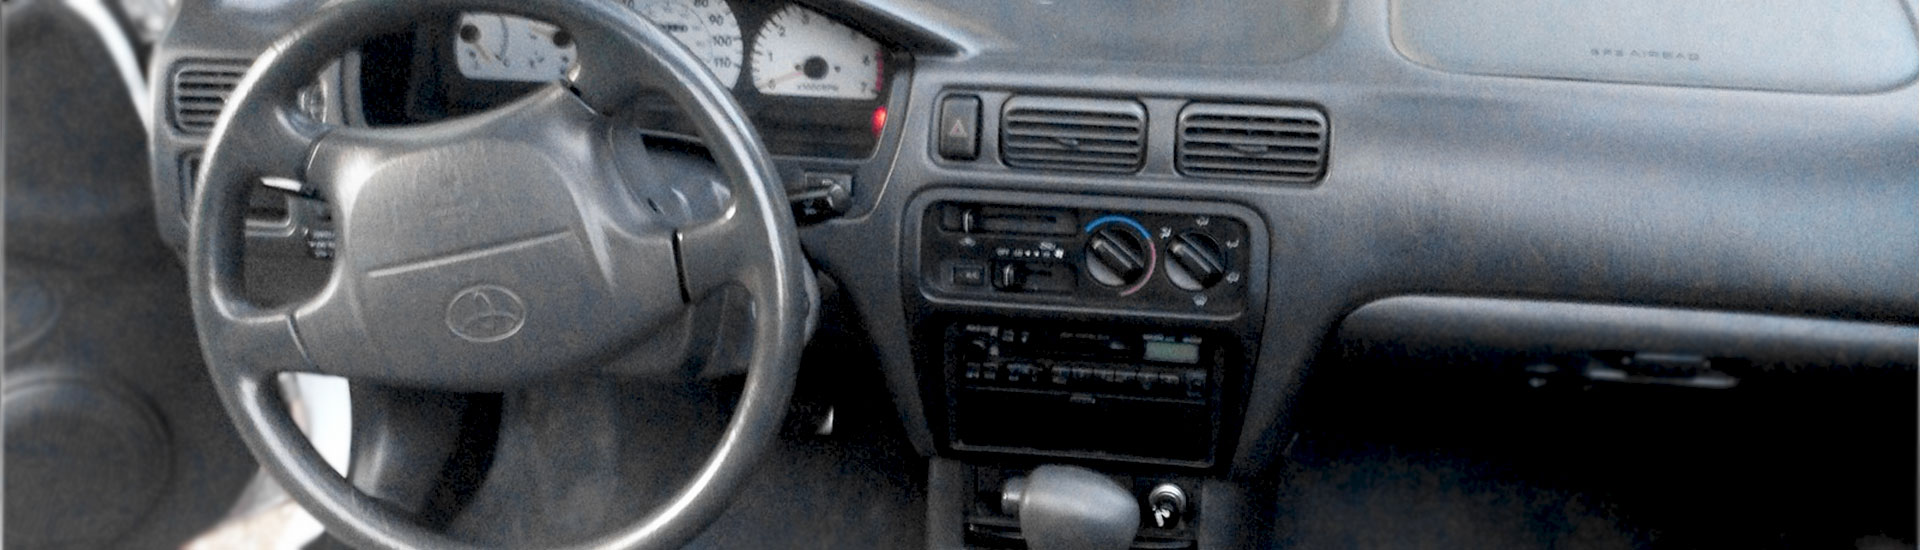 Toyota Paseo Dash Trim Kits